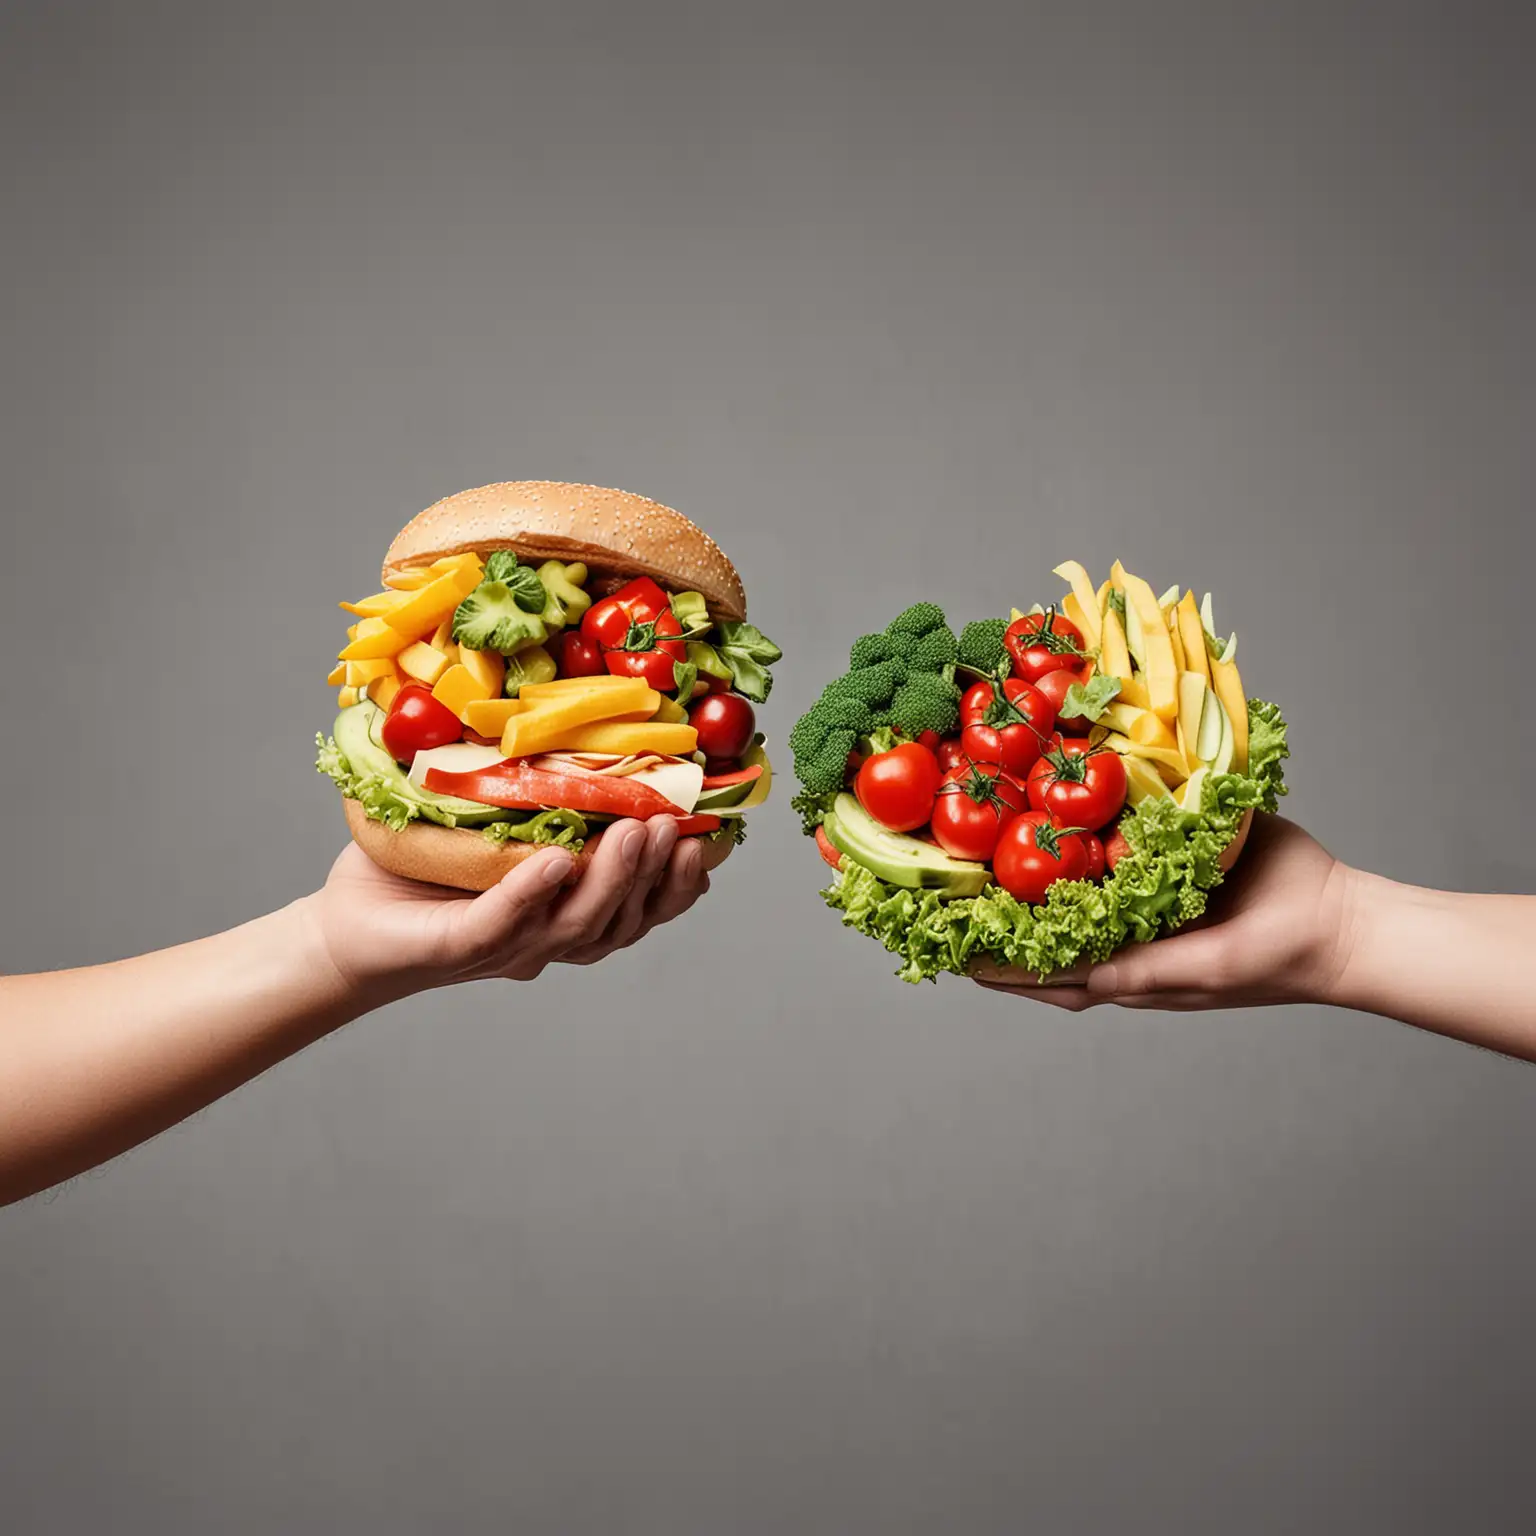 Healthy-vs-Fast-Food-Choices-Balanced-Diet-Dilemma